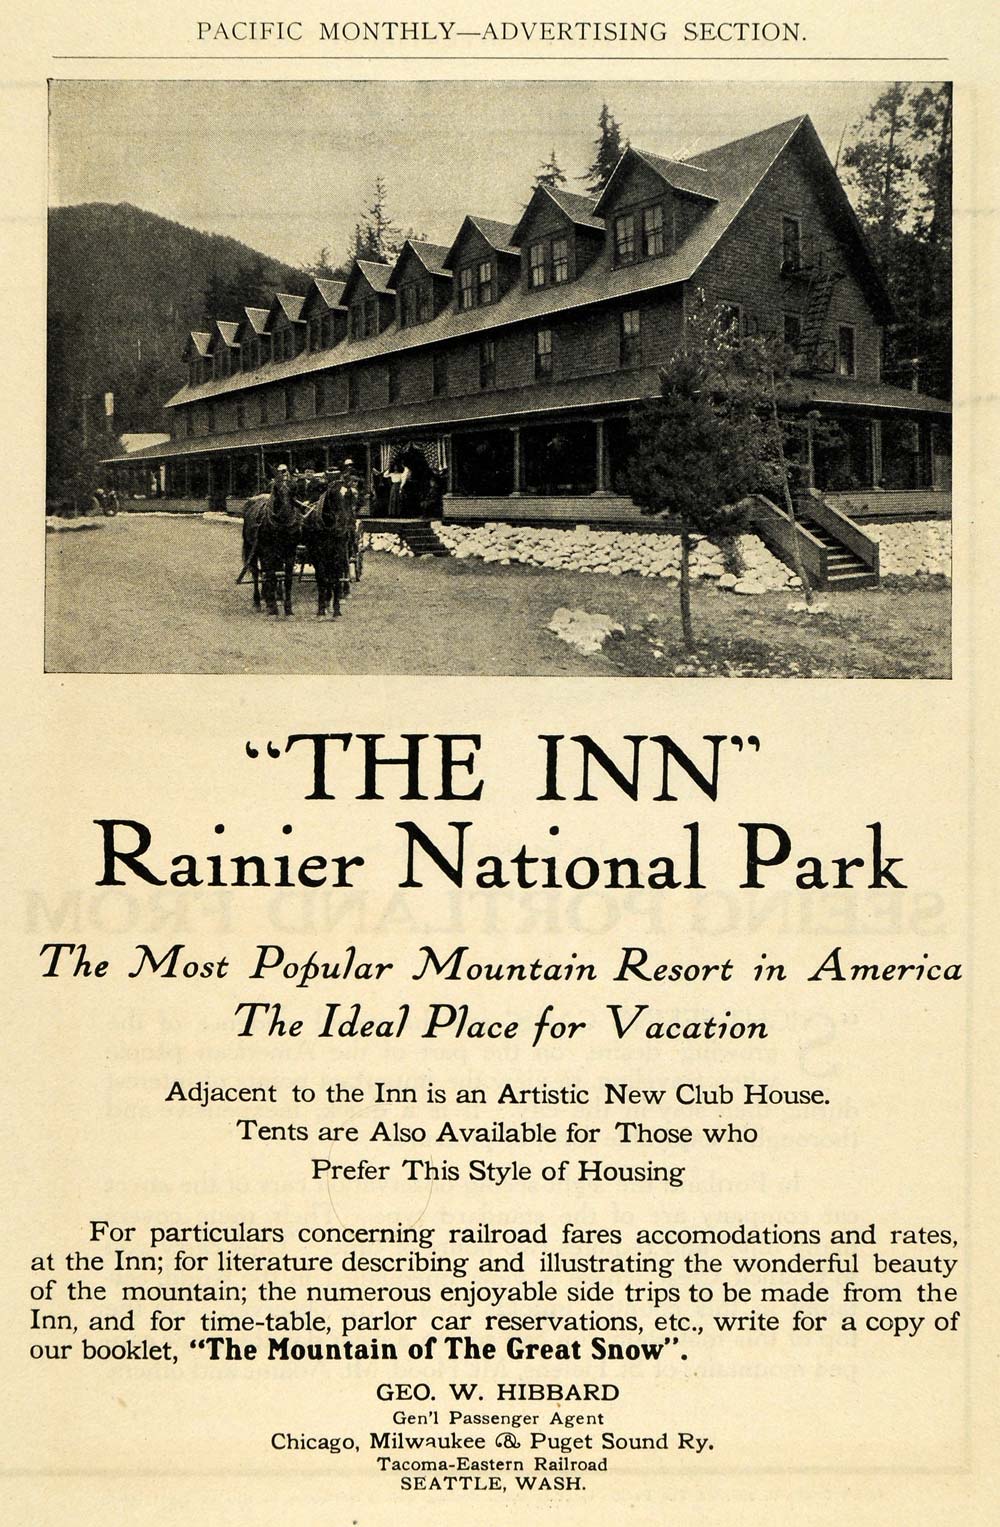 1911 Ad The Inn Rainier National Park George W. Hibbard - ORIGINAL PM2